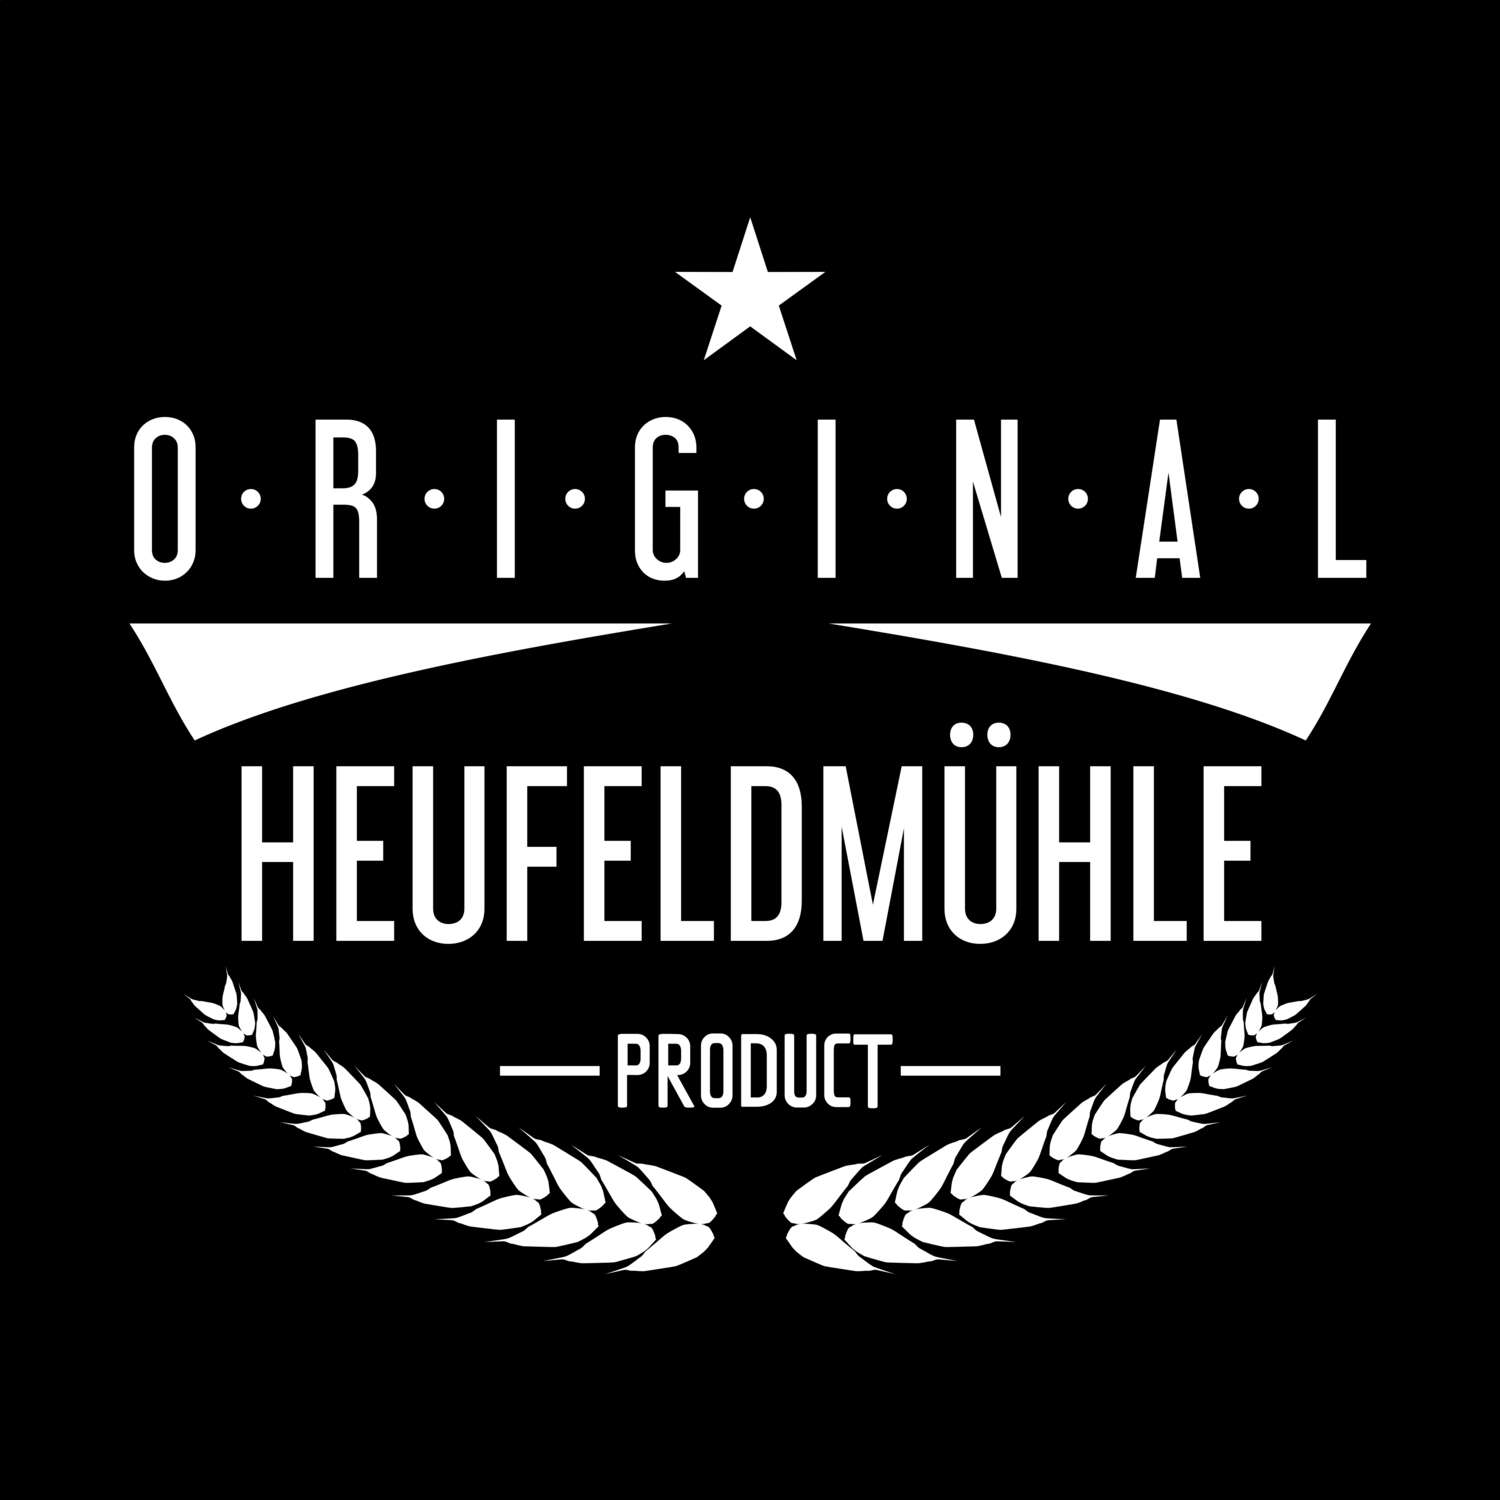 Heufeldmühle T-Shirt »Original Product«